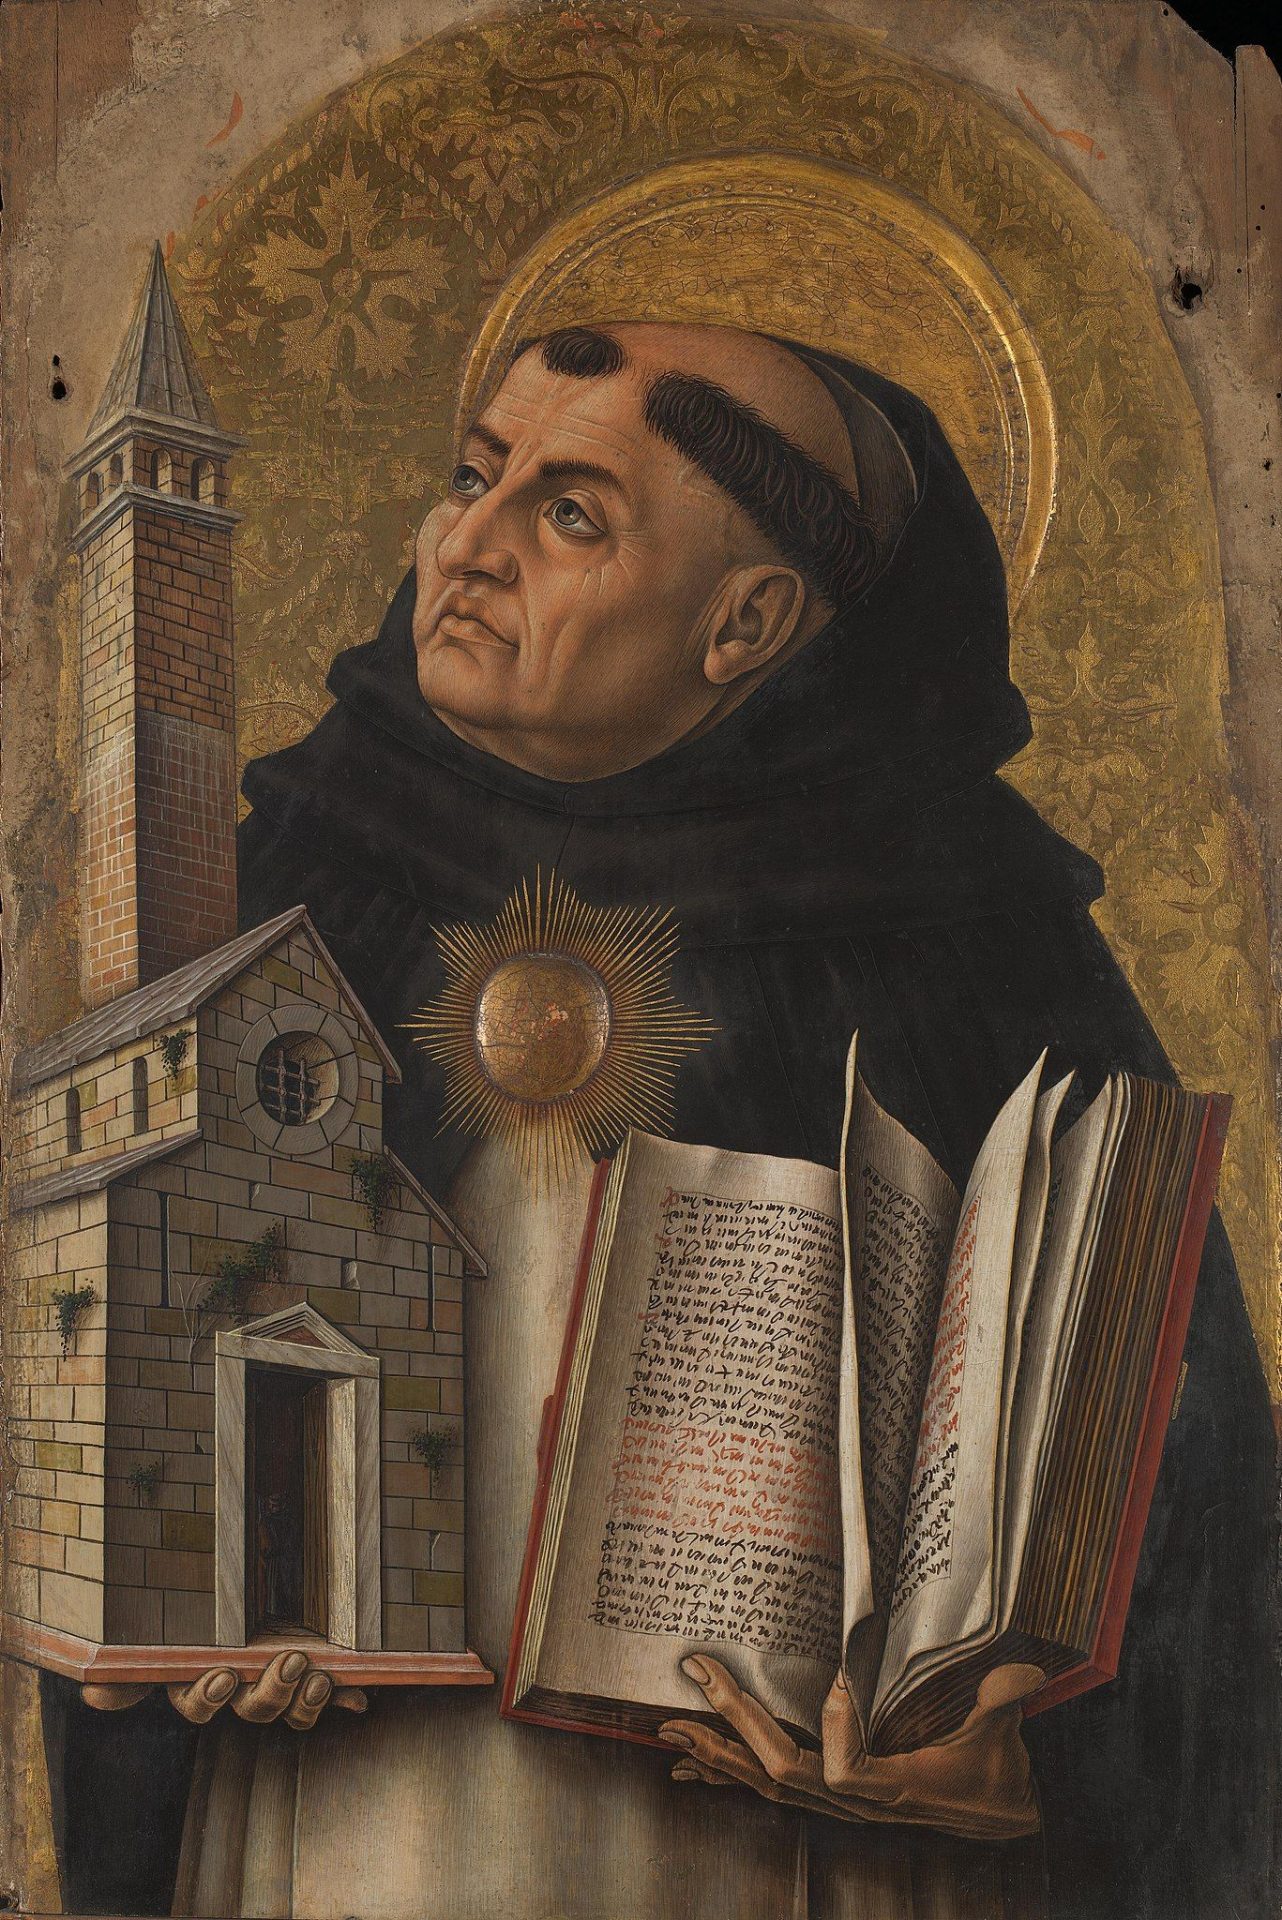 Thomas Aquinas in a 15th-century altarpiece (Ascoli Piceno, Italy, by Carlo Crivelli).